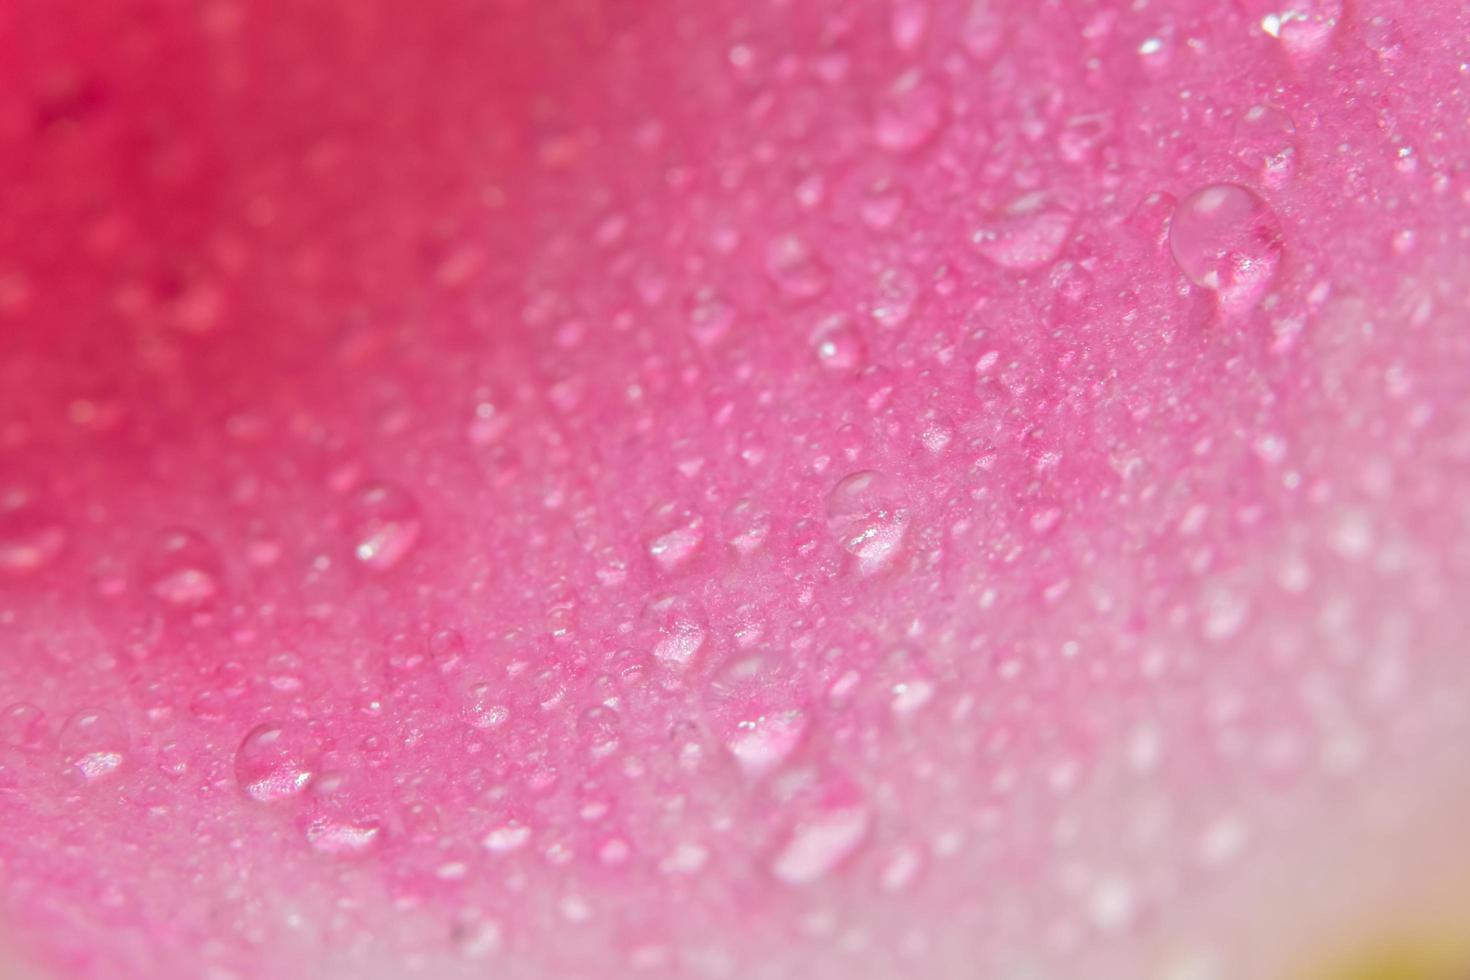 goccioline d'acqua sui petali di una rosa rosa foto